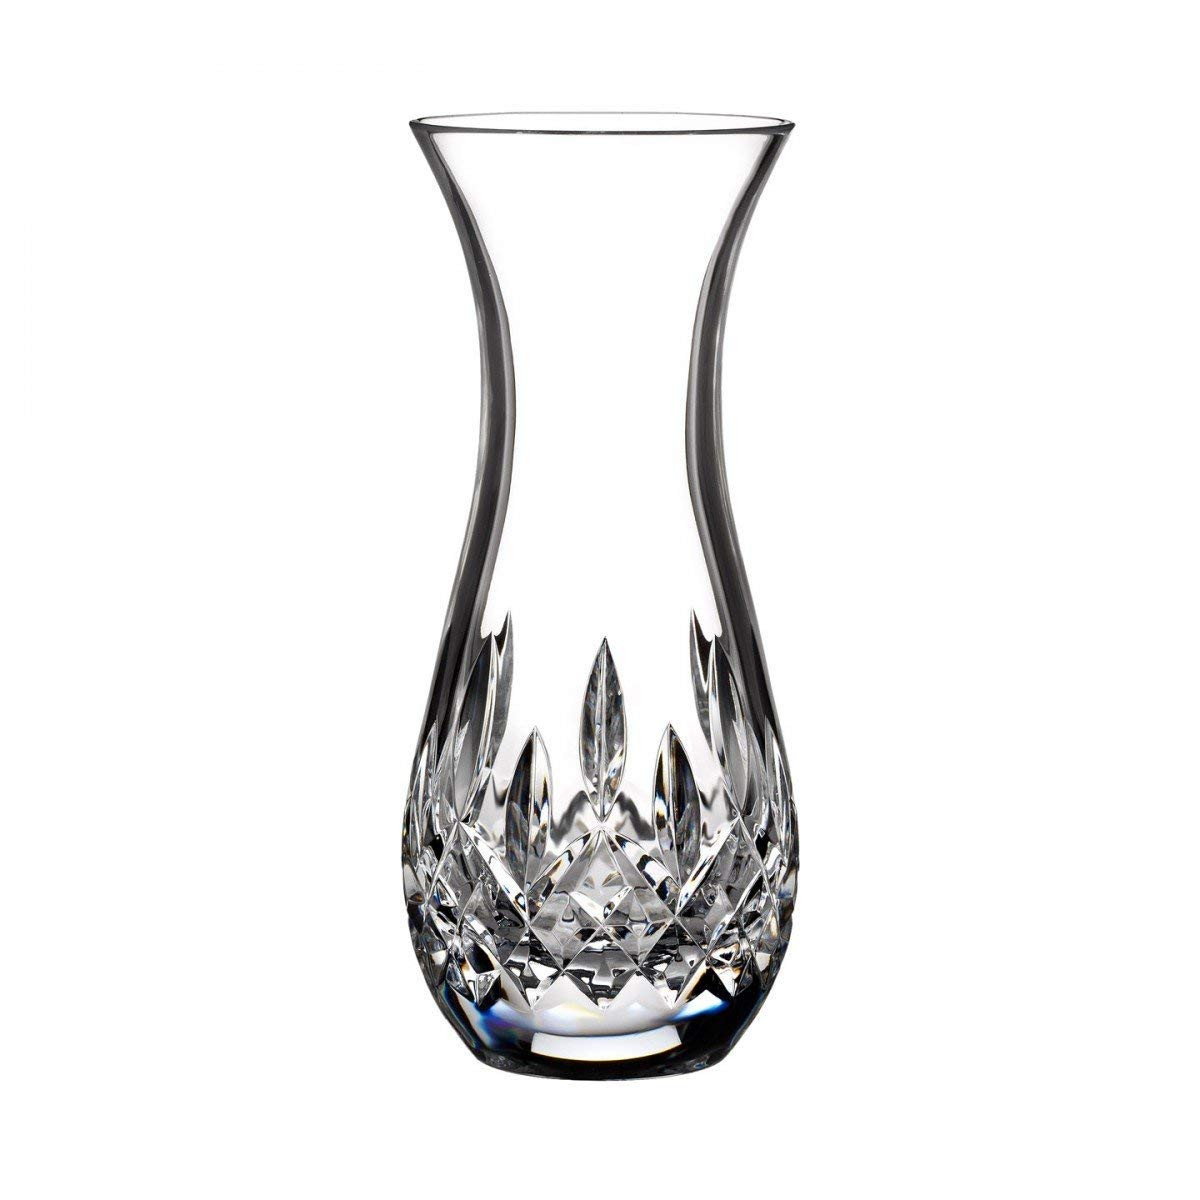 10 Fabulous Waterford Lismore Vase 8 2024 free download waterford lismore vase 8 of amazon com waterford lismore sugar 6 bud vase home kitchen in 61rs3a6kkml sl1200